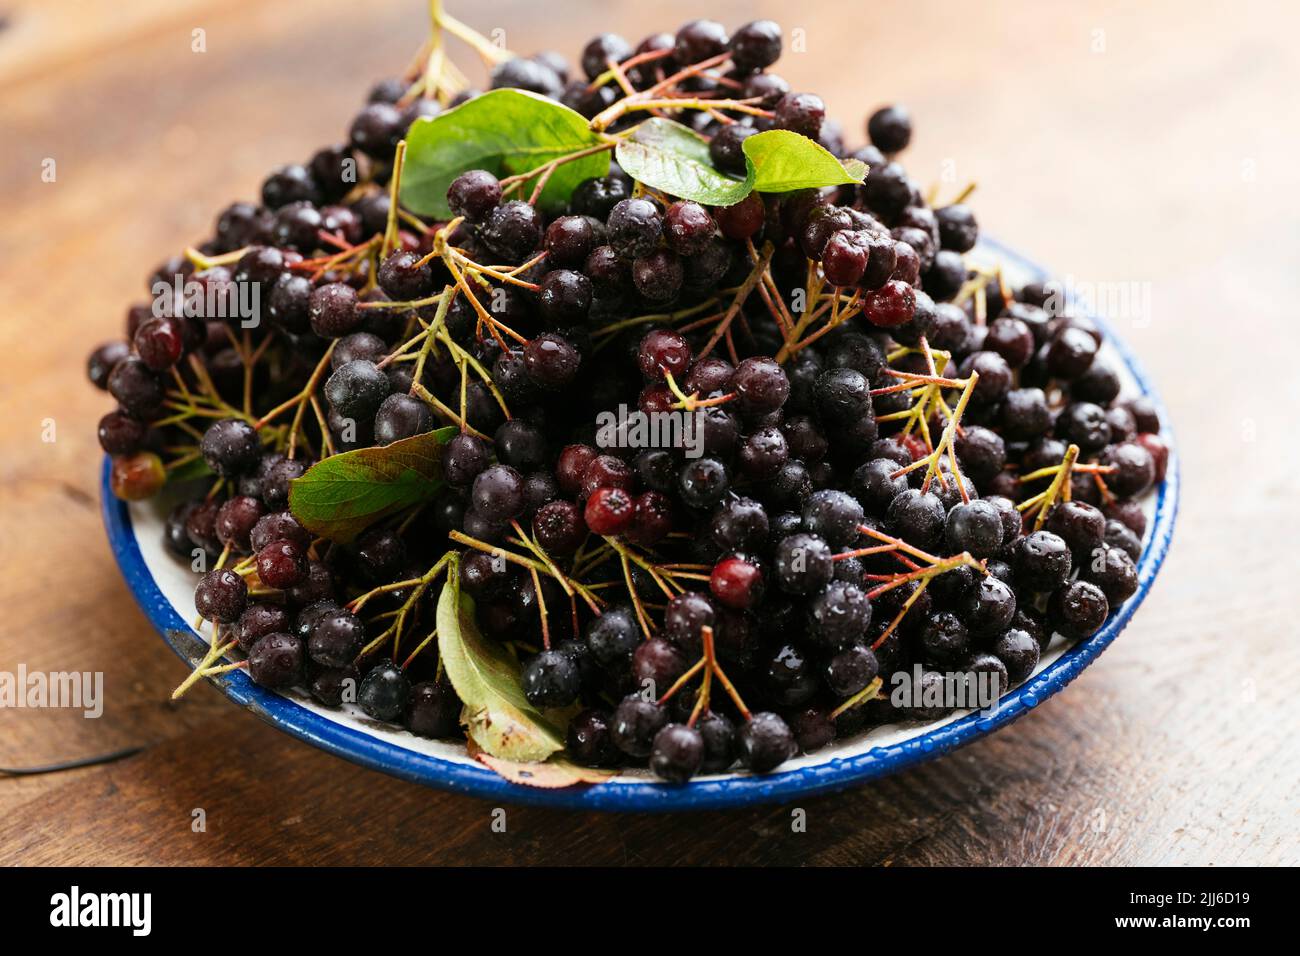 Bowl with fresh aronia berries Stock Photo